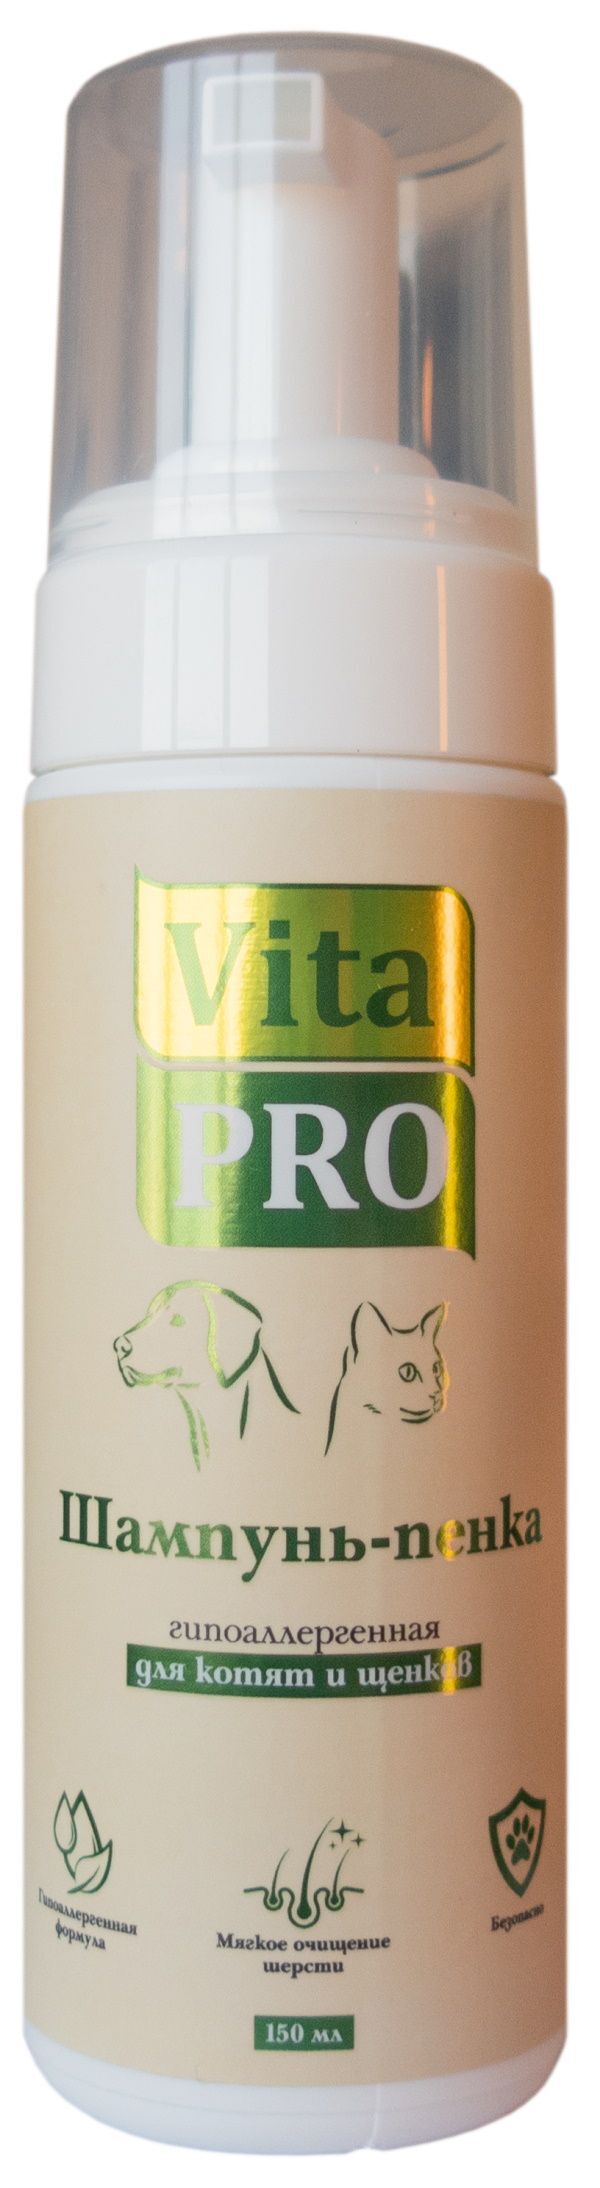 Vita Pro 150 мл шампунь-пенка для котят и щенков гипоаллергенная 1х24